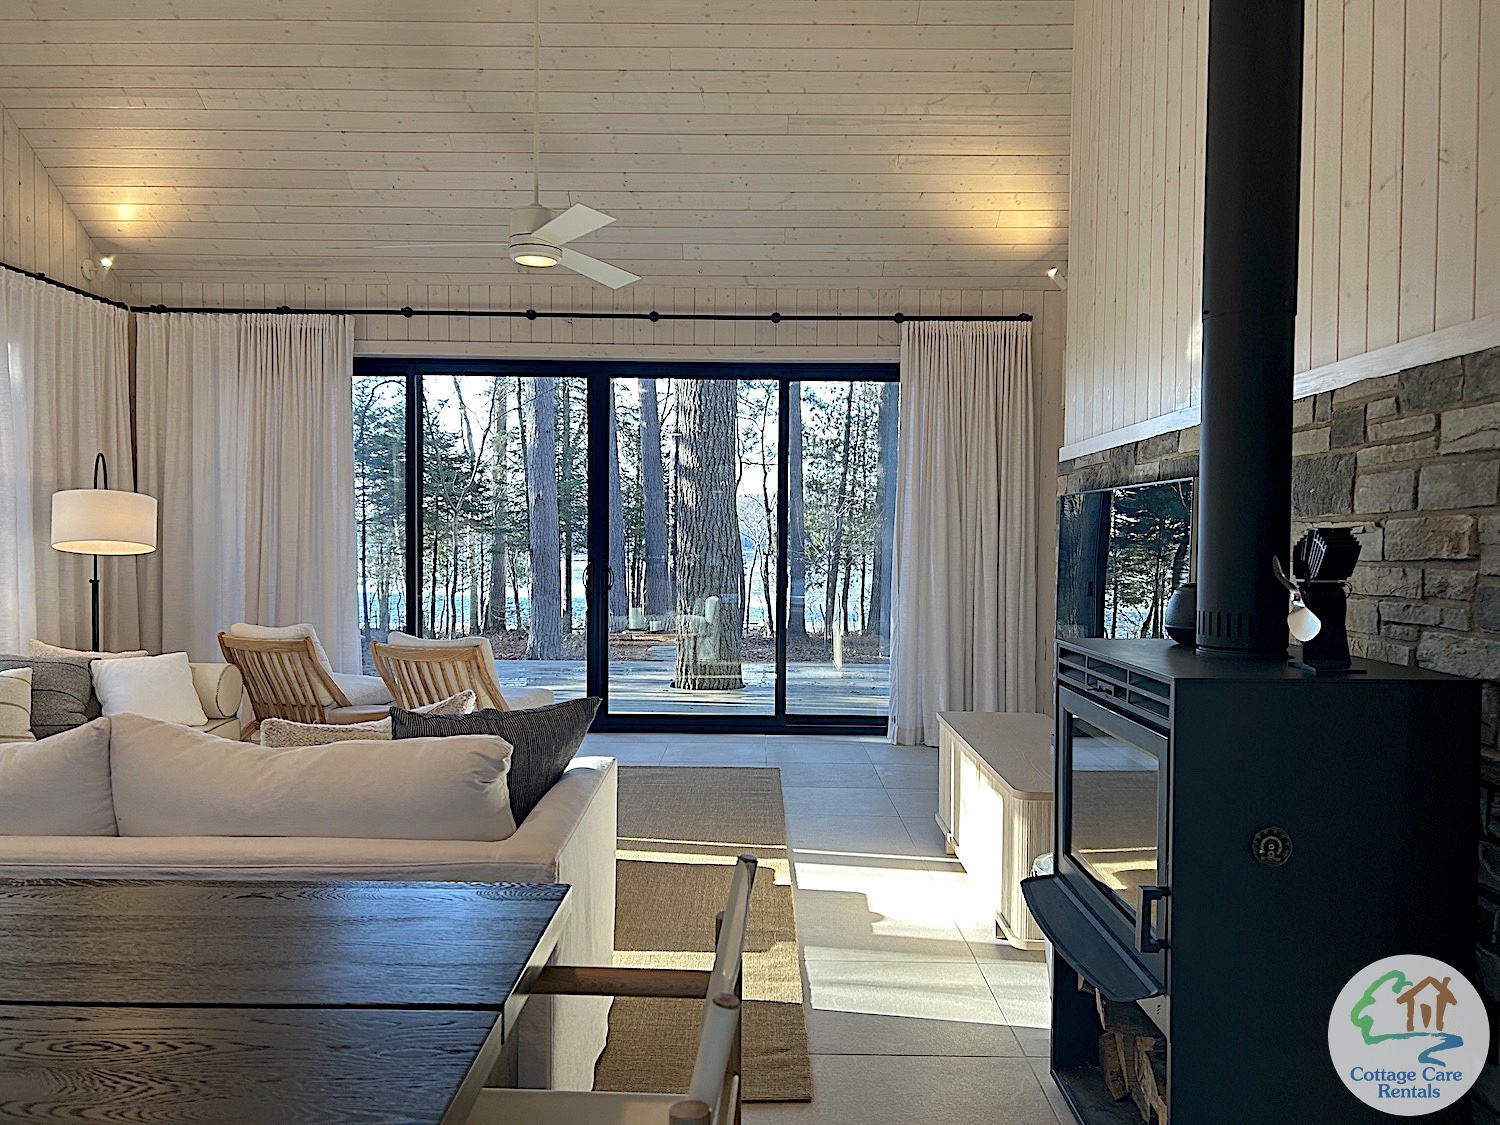 Oblong Beach House - Sunroom with retractable glass doors